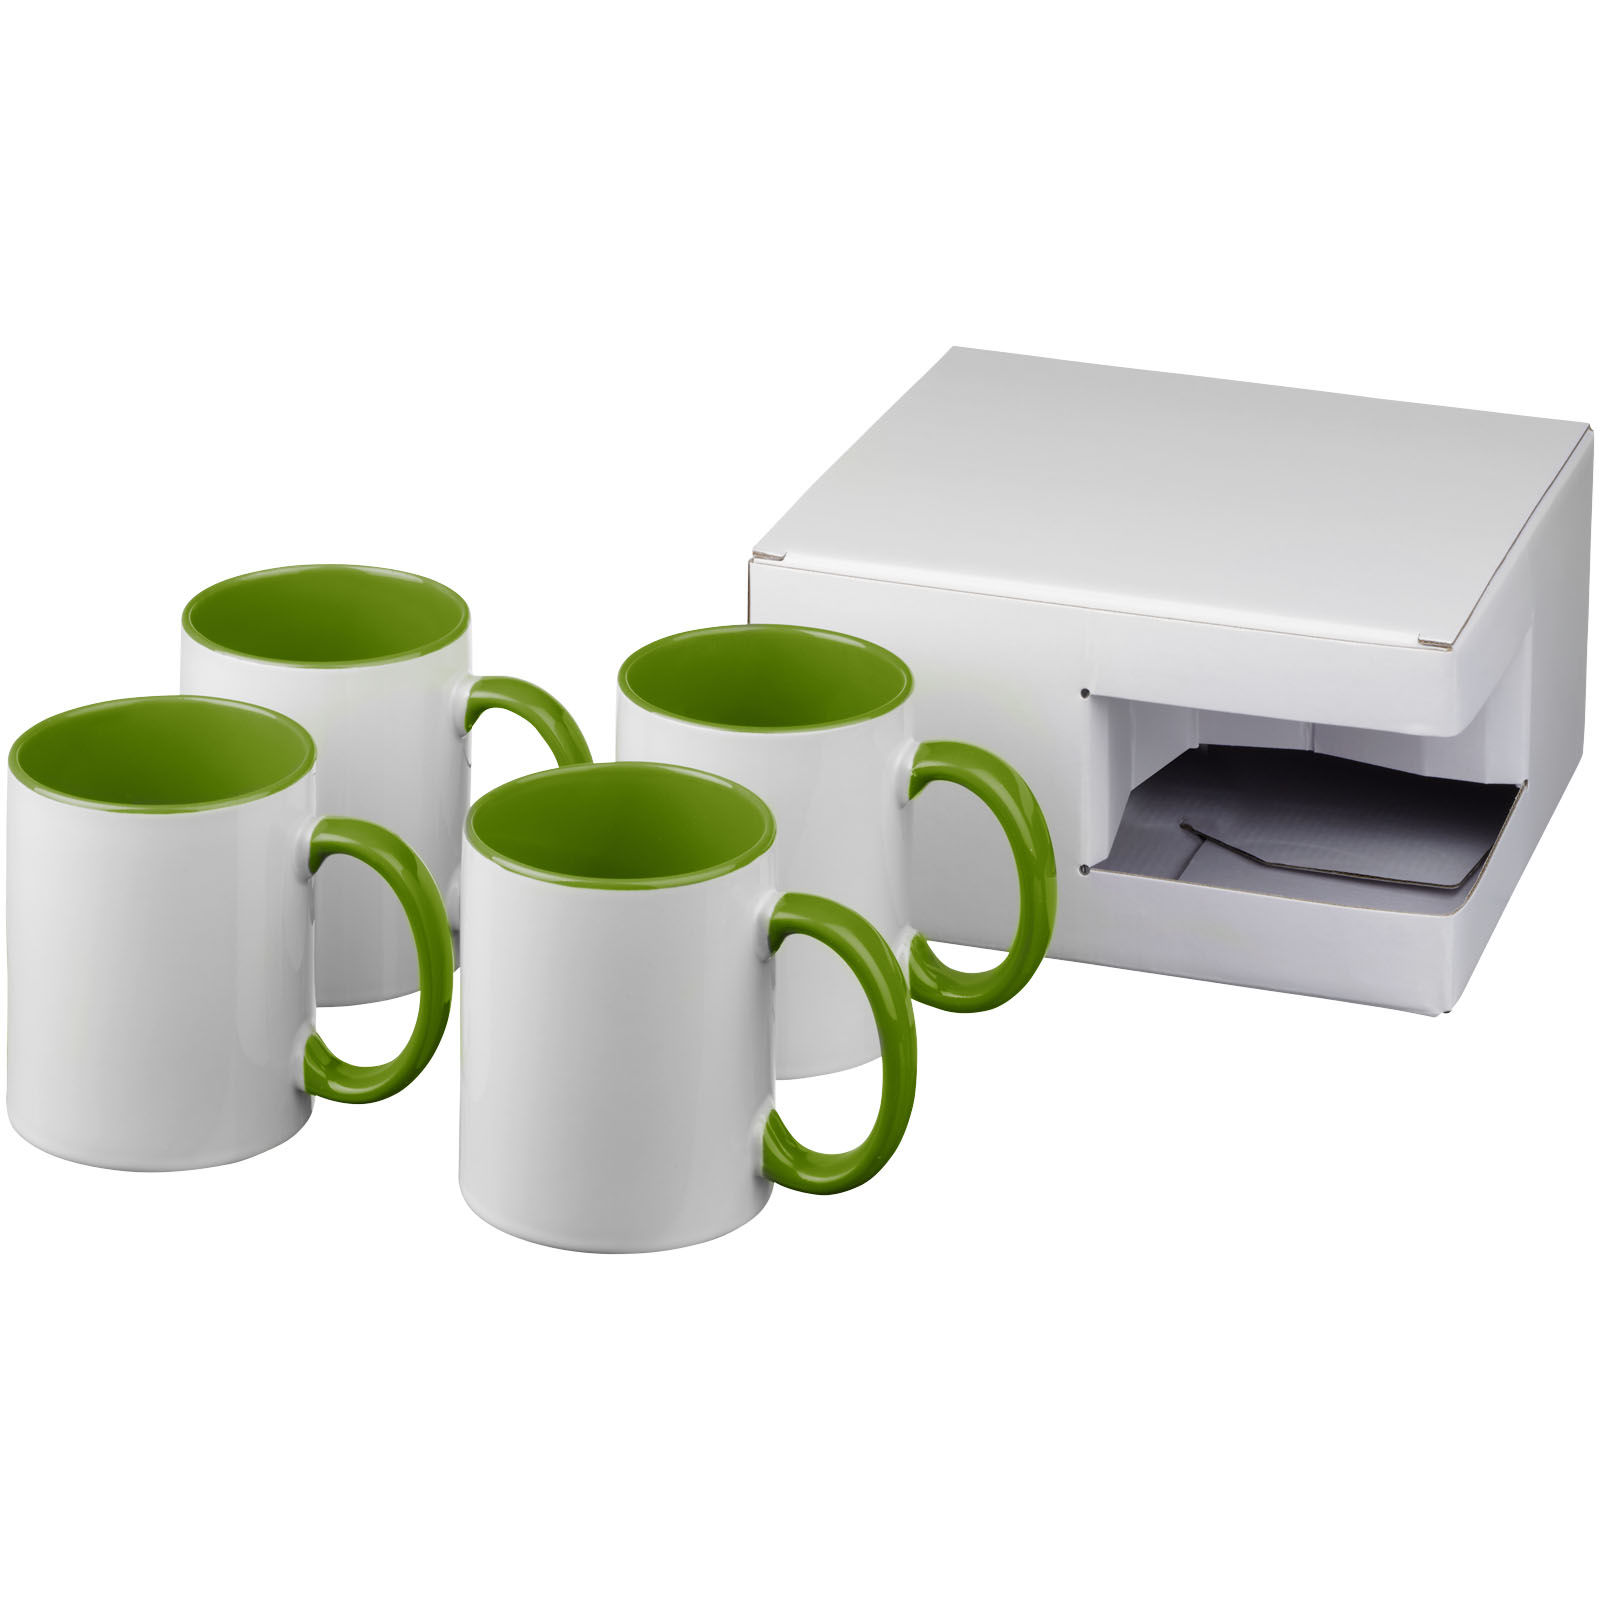 Advertising Gift sets - Ceramic sublimation mug 4-pieces gift set